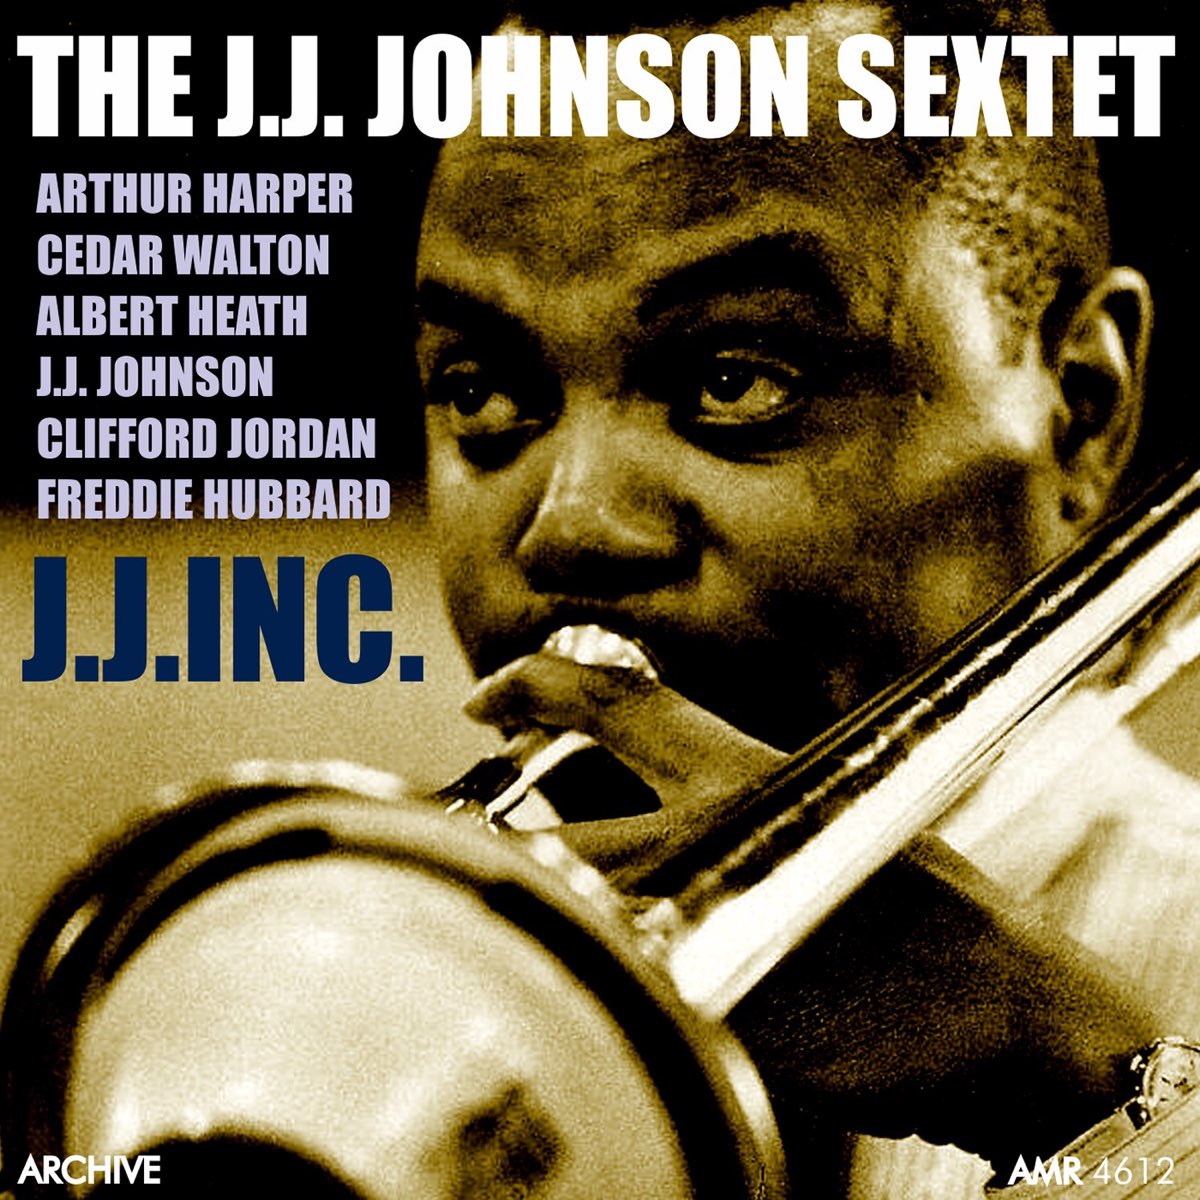 The J. J. Johnson Sextet – J. J. Inc
projazz.net/the-j-j-johnso…

J.J. Inc. is an album by jazz trombonist J. J. Johnson, released in 1961.

#JJJohnson #trombone #hardbop #projazz #projazznet